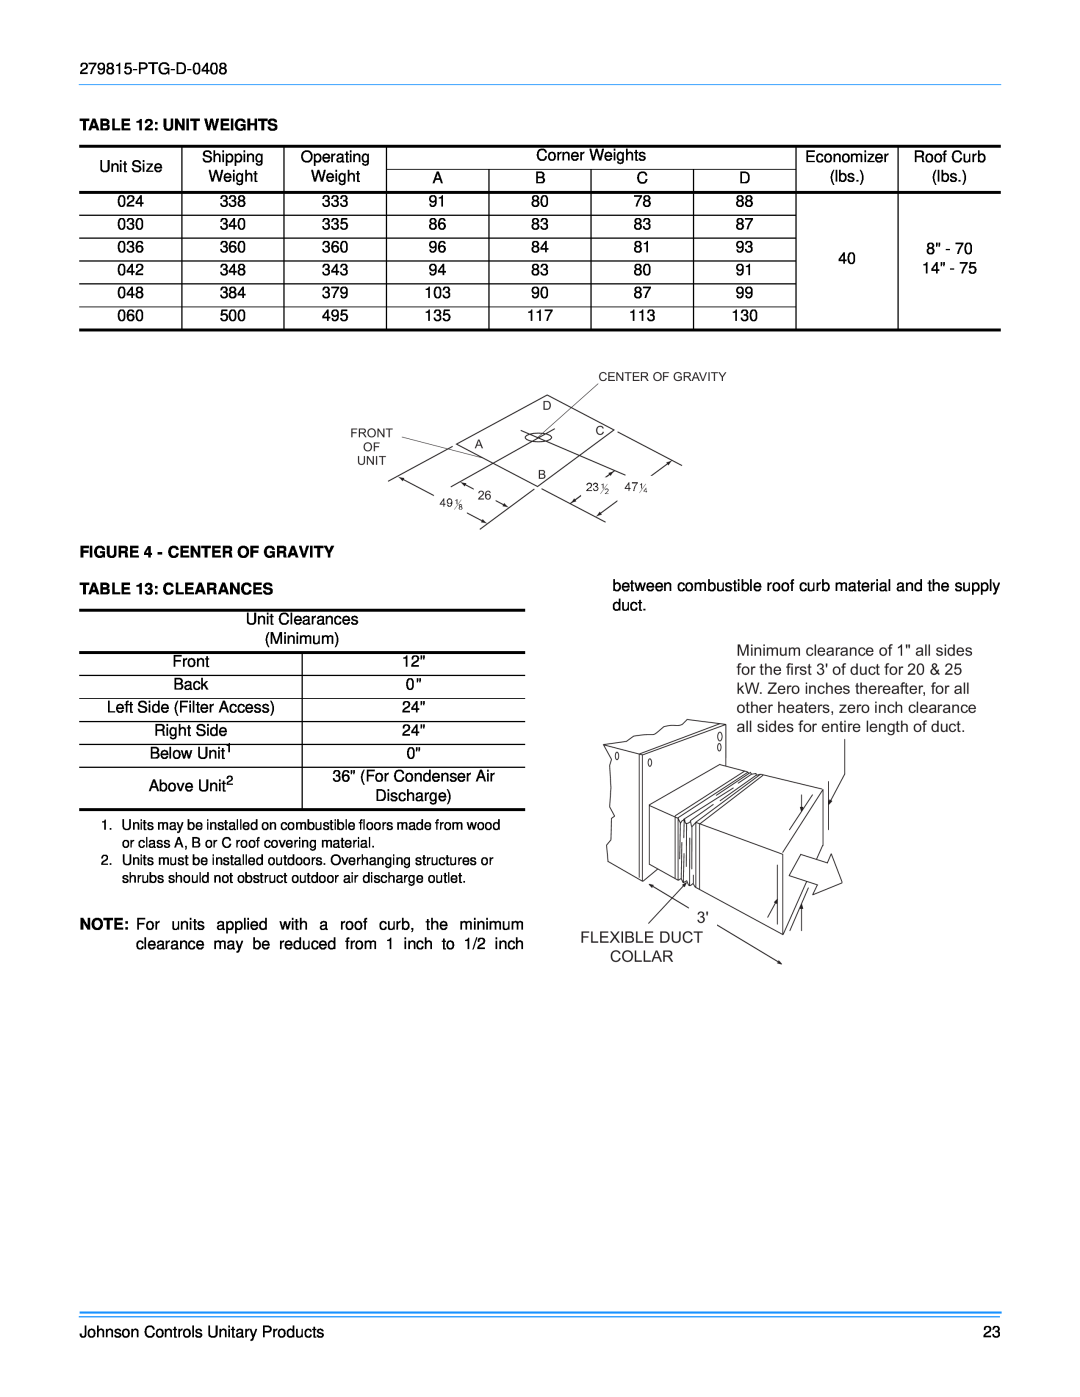 Johnson Controls ACPU024 THRU 060 manual Flexible Duct Collar, Unit Weights, Center Of Gravity Clearances 